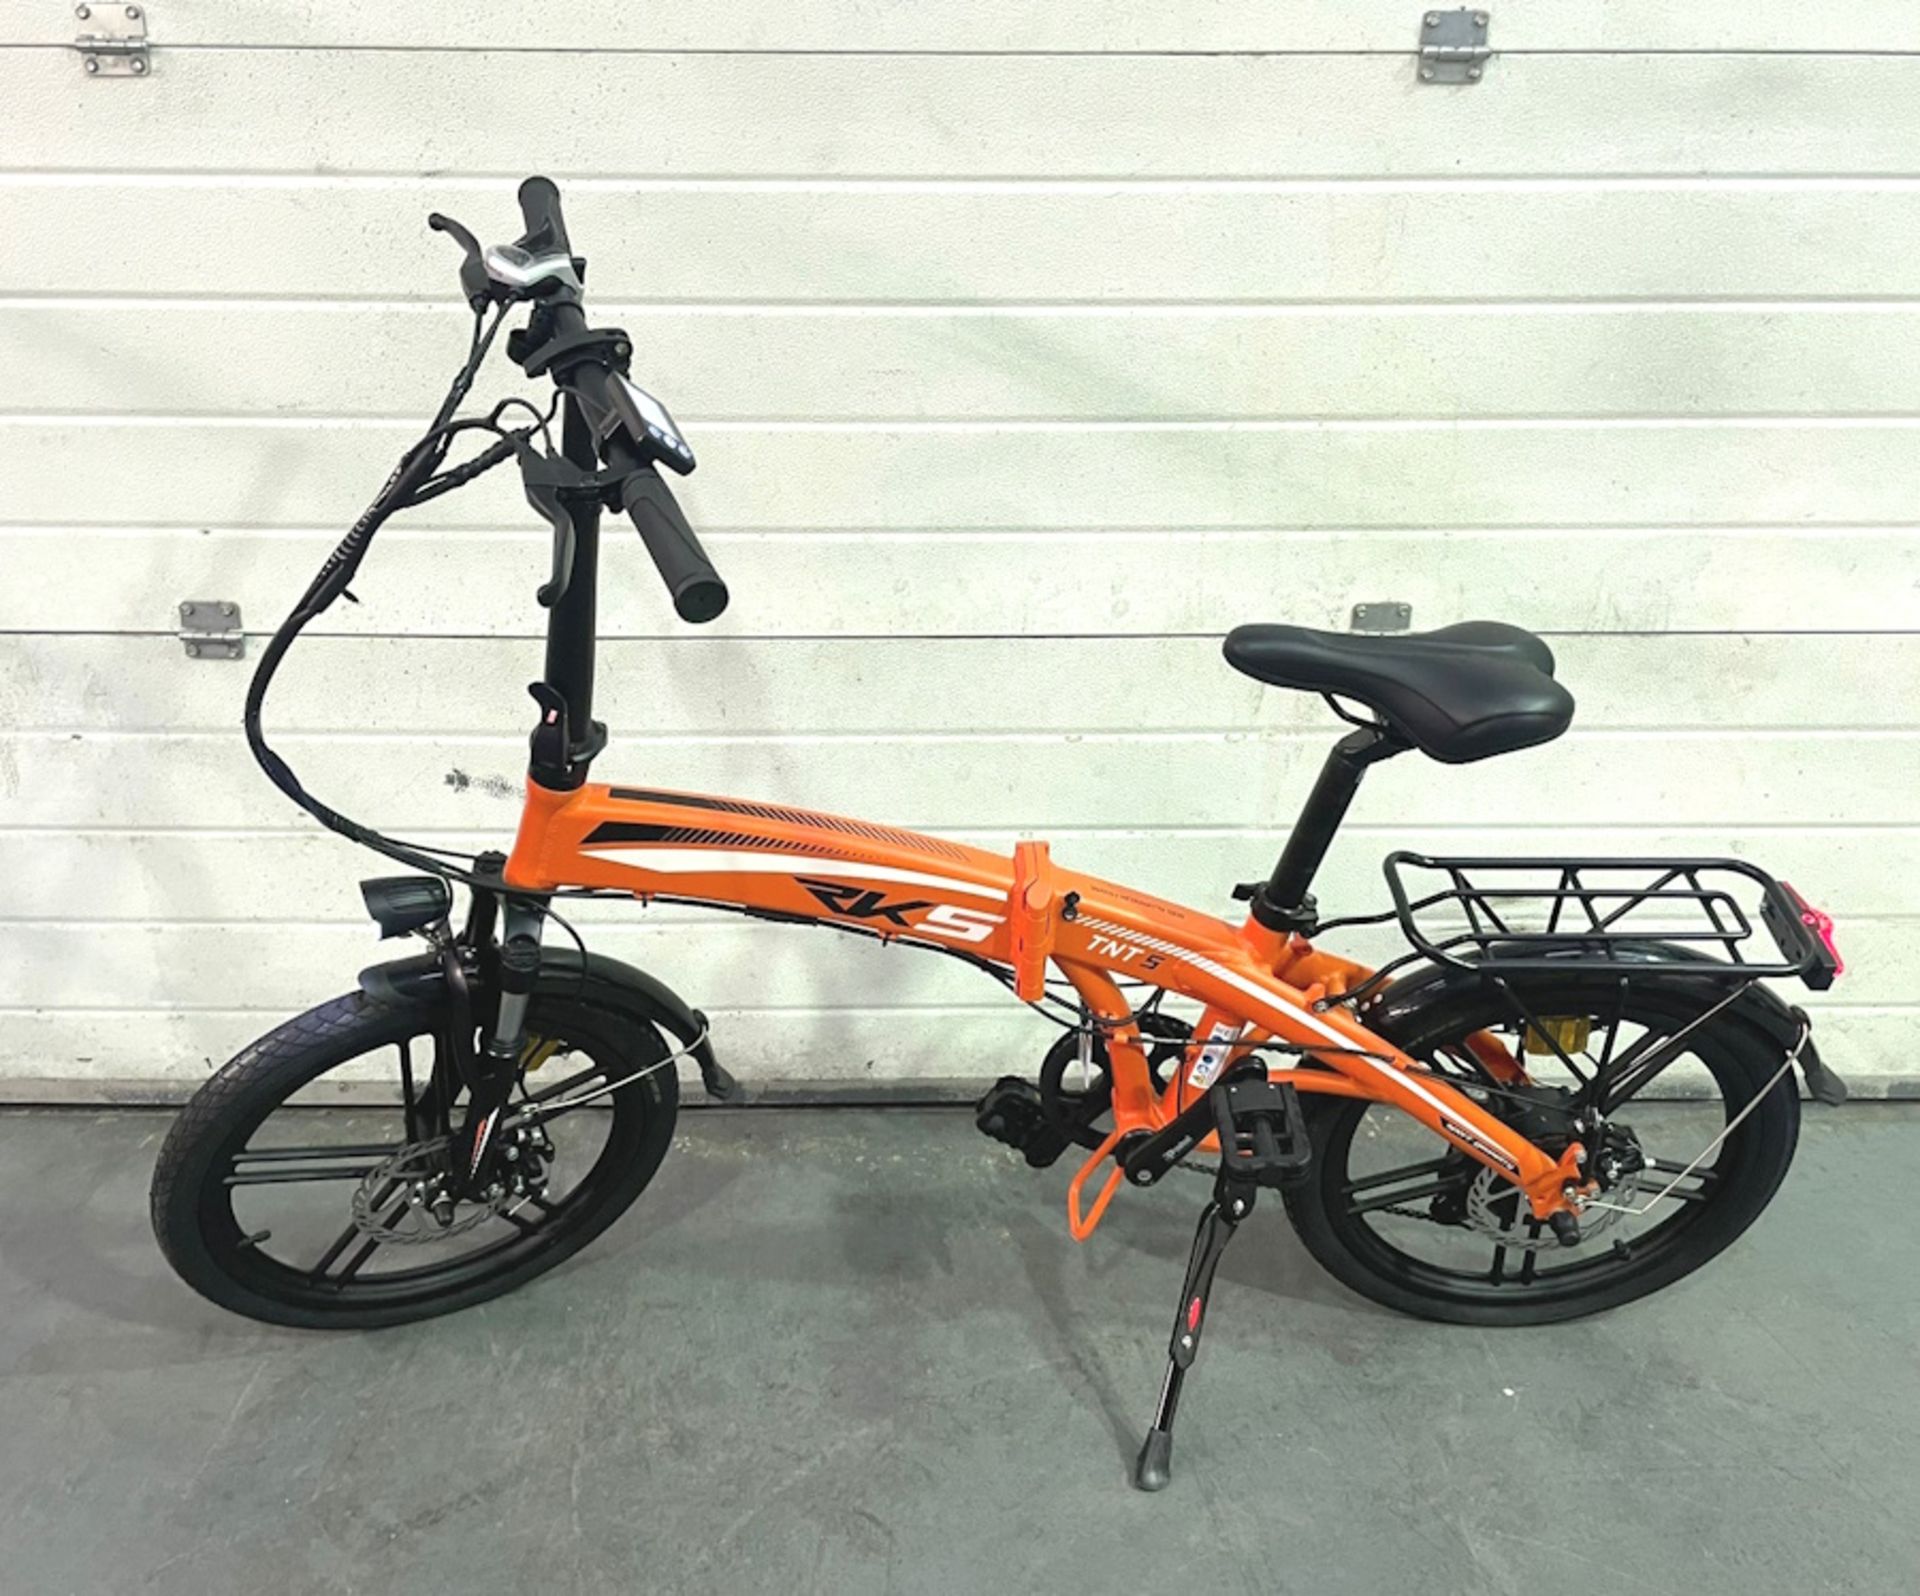 RKS TNT 5 Pro folding e-bike, orange, - Image 3 of 6